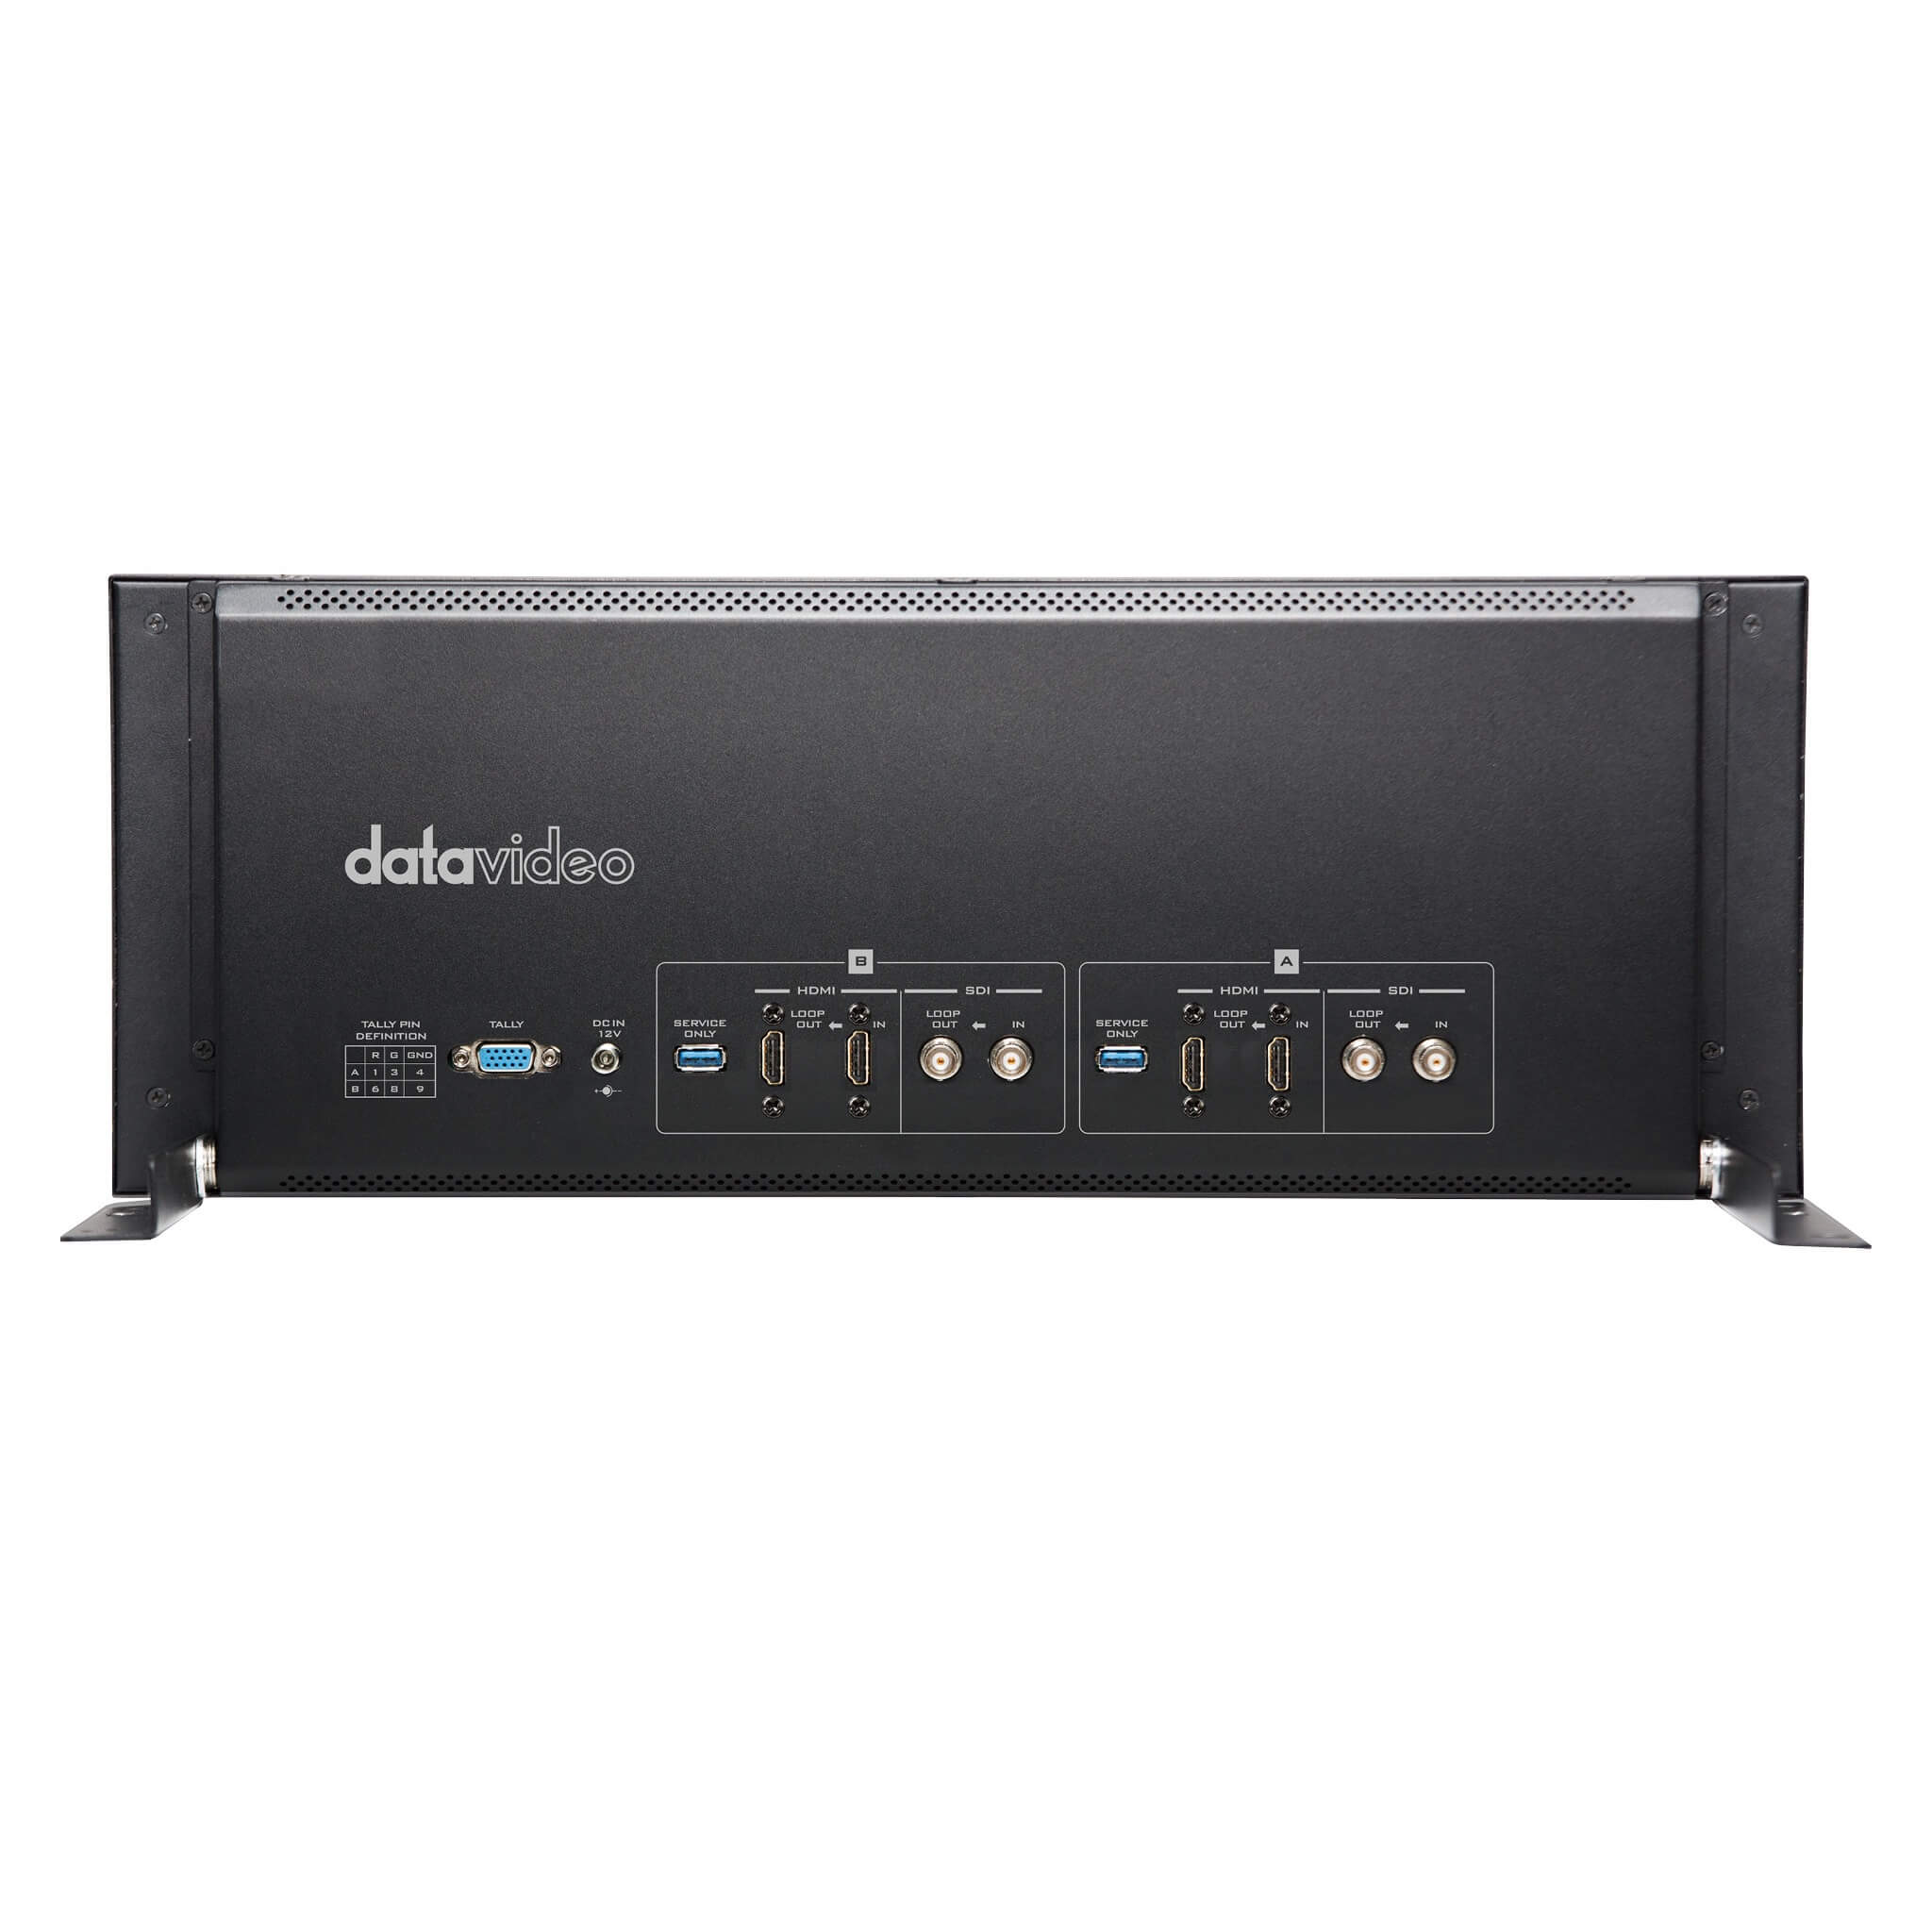 DataVideo TLM-102 - Dual 10-inch Full HD 4RU Rack Mount Monitor, rear